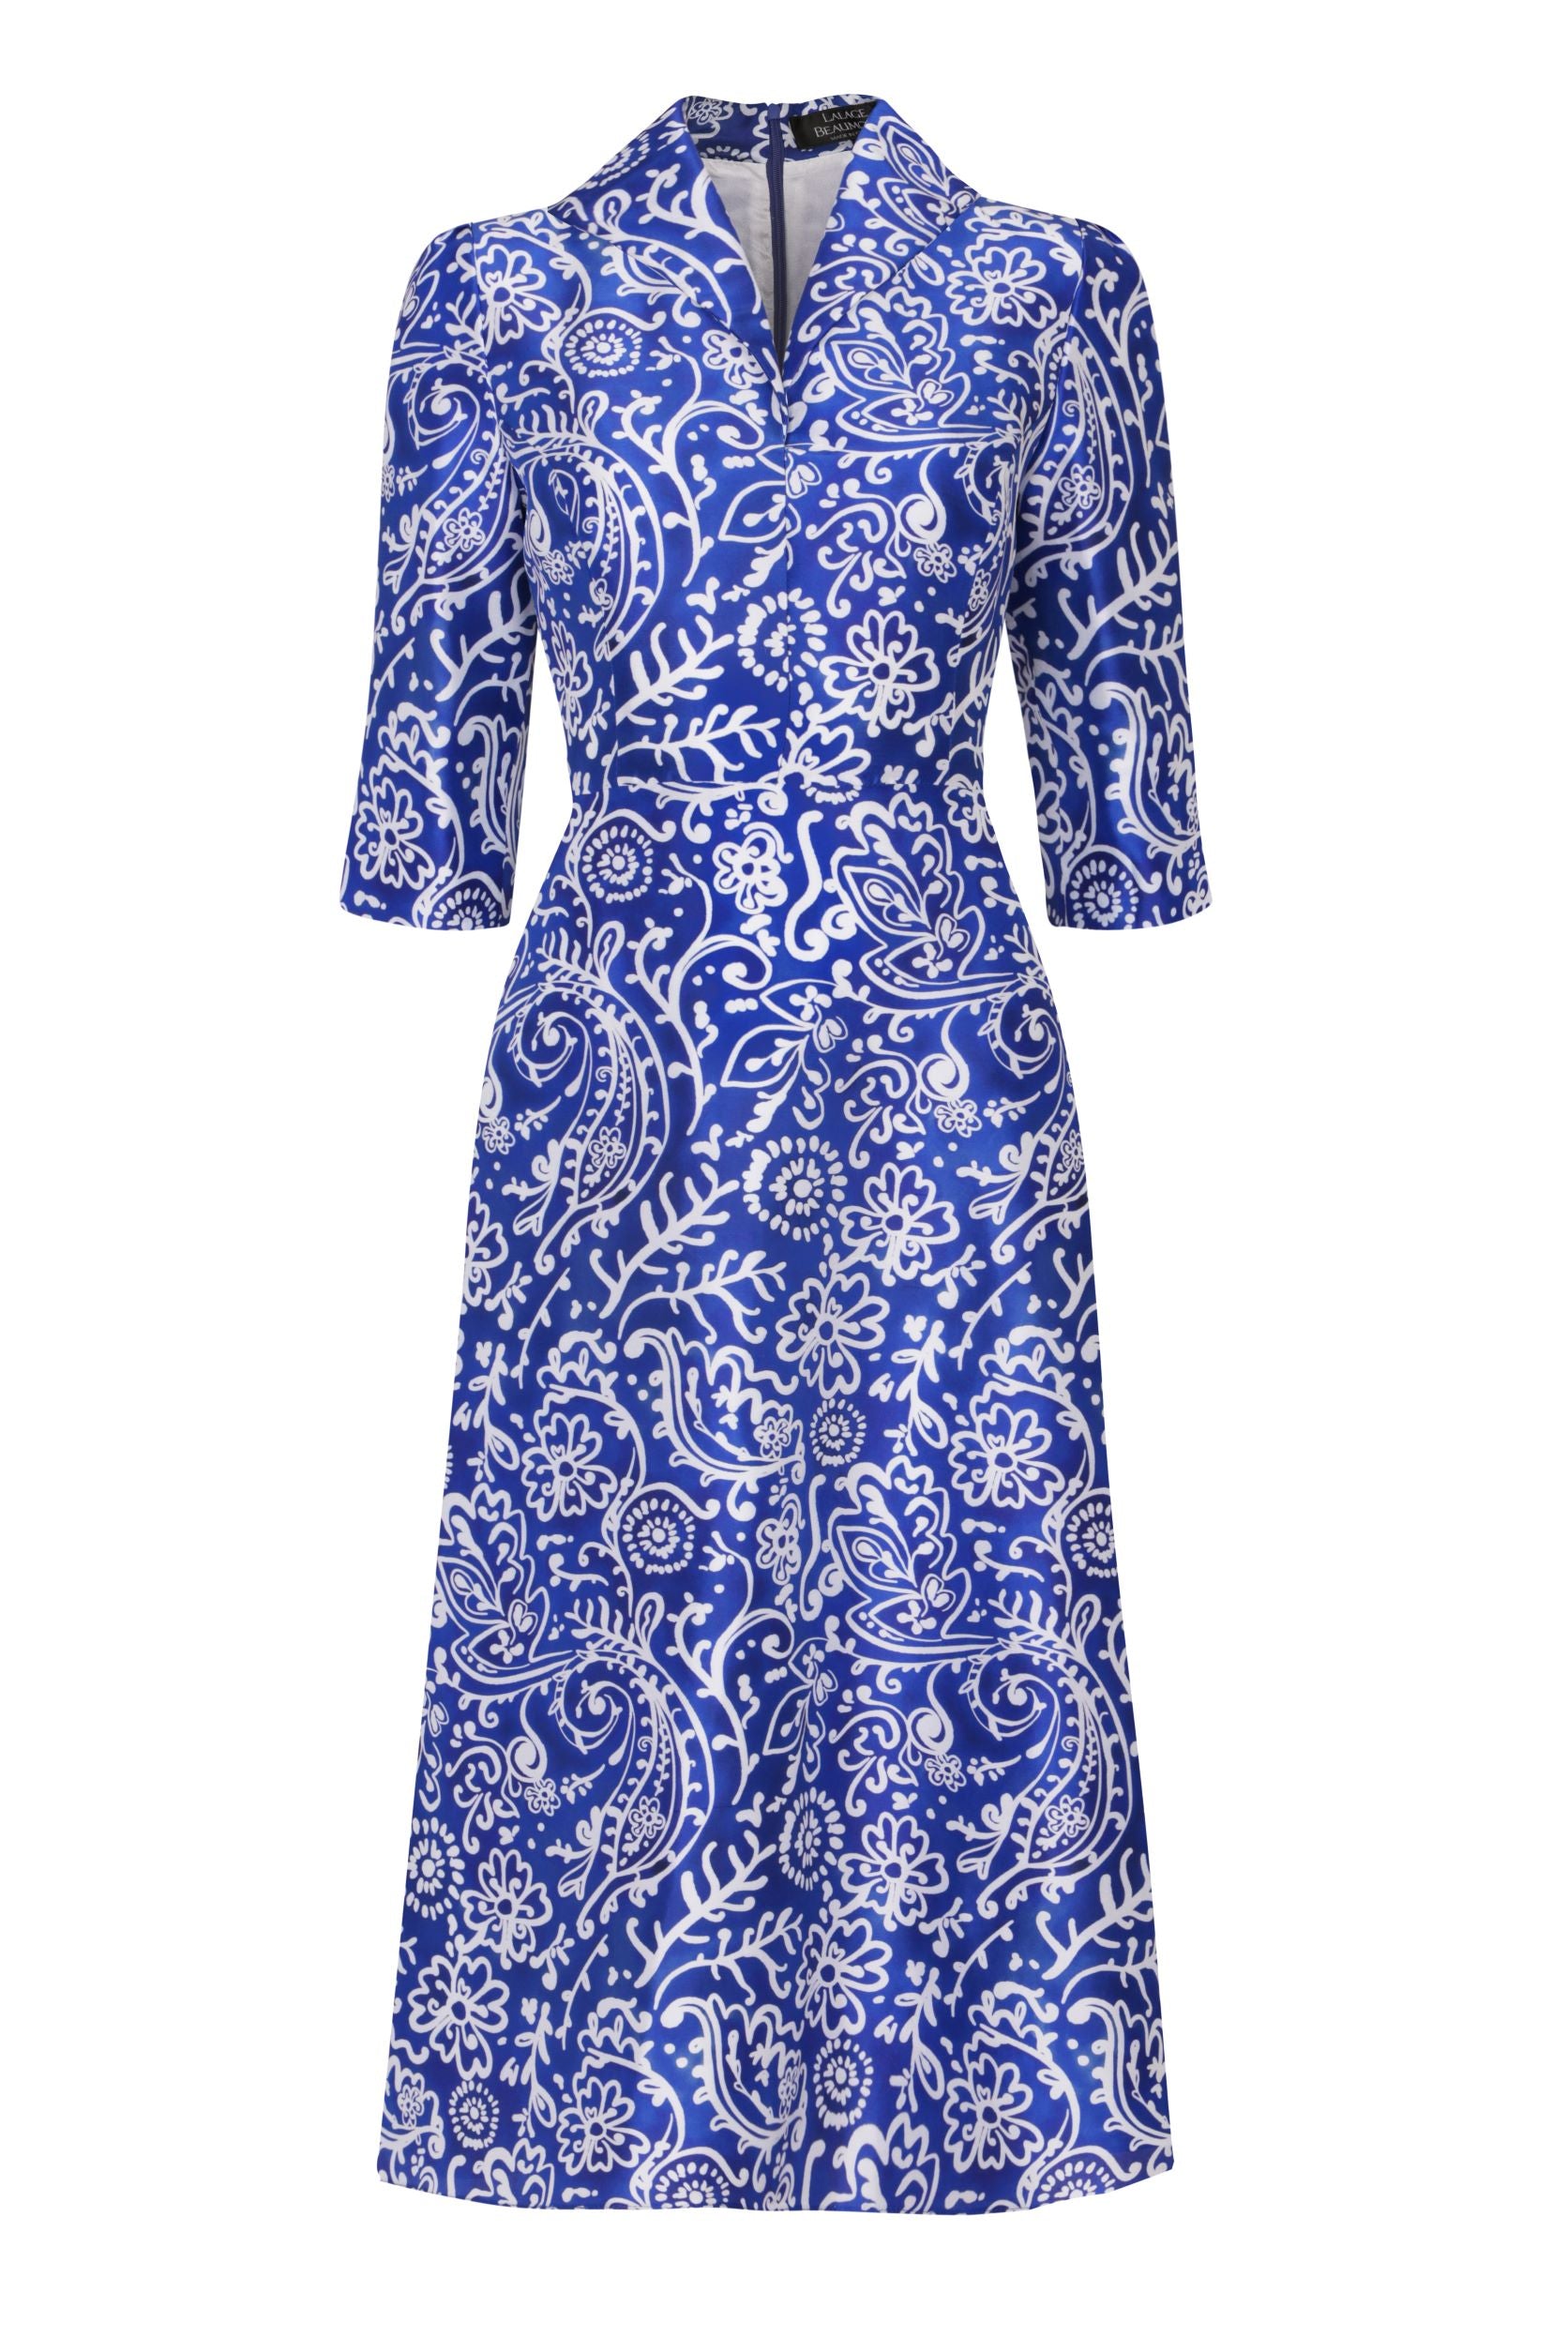 Calf Length, A-Line Dress in Blue and White Printed Silk Shantung ...